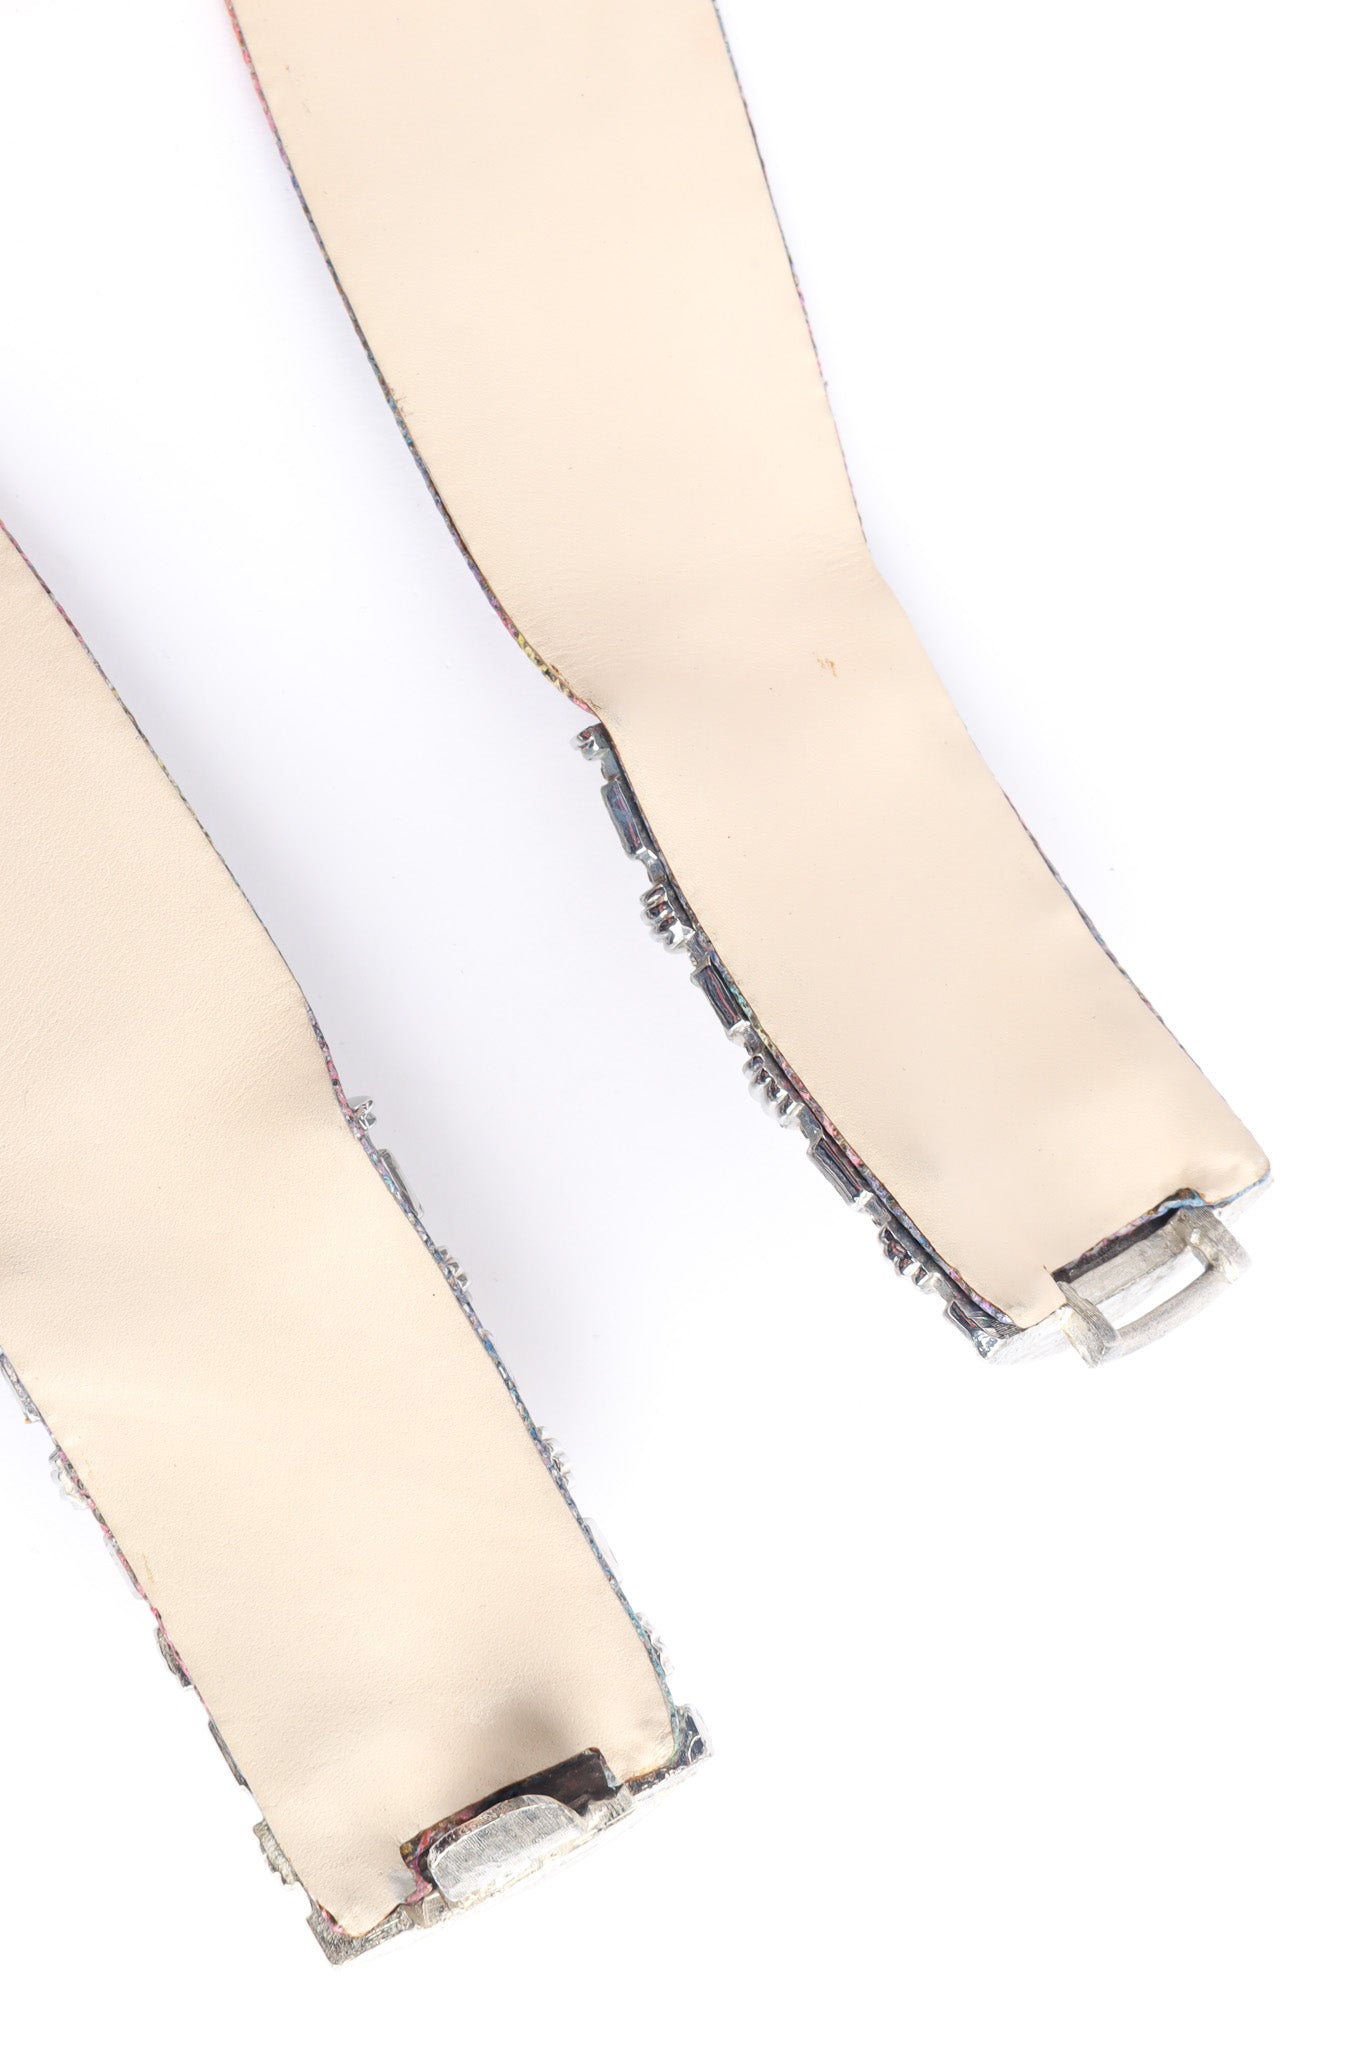 Vintage Judith Leiber Jeweled Snakeskin Leather Belt clasp reverse/light marks@ Recess LA